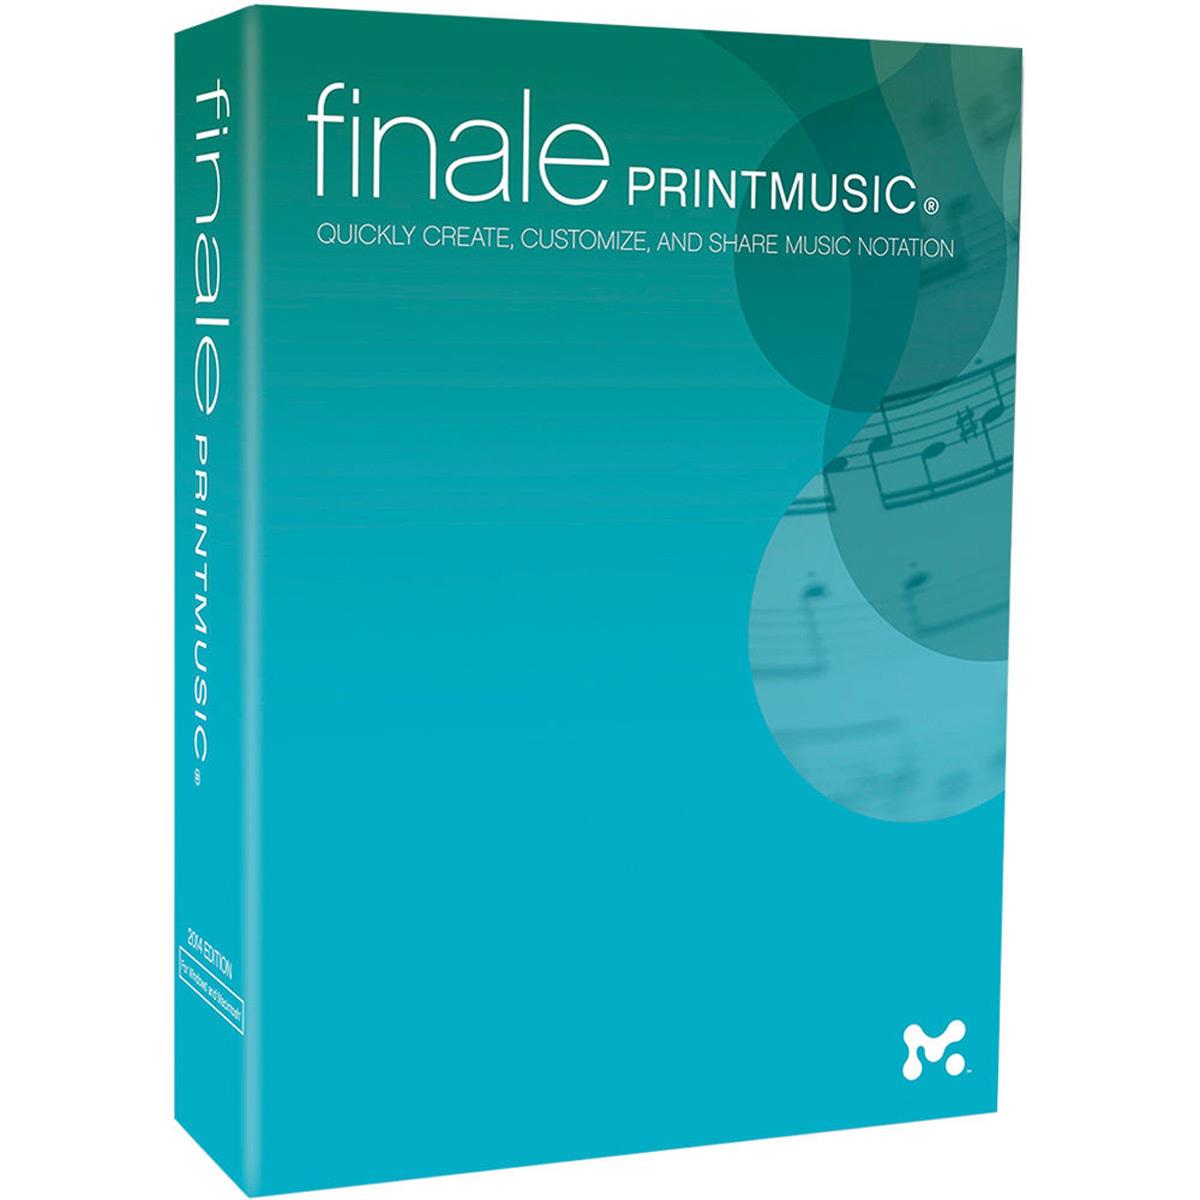 MakeMusic Finale PrintMusic 2014 Professional Music Notation Software - Download -  1113-18